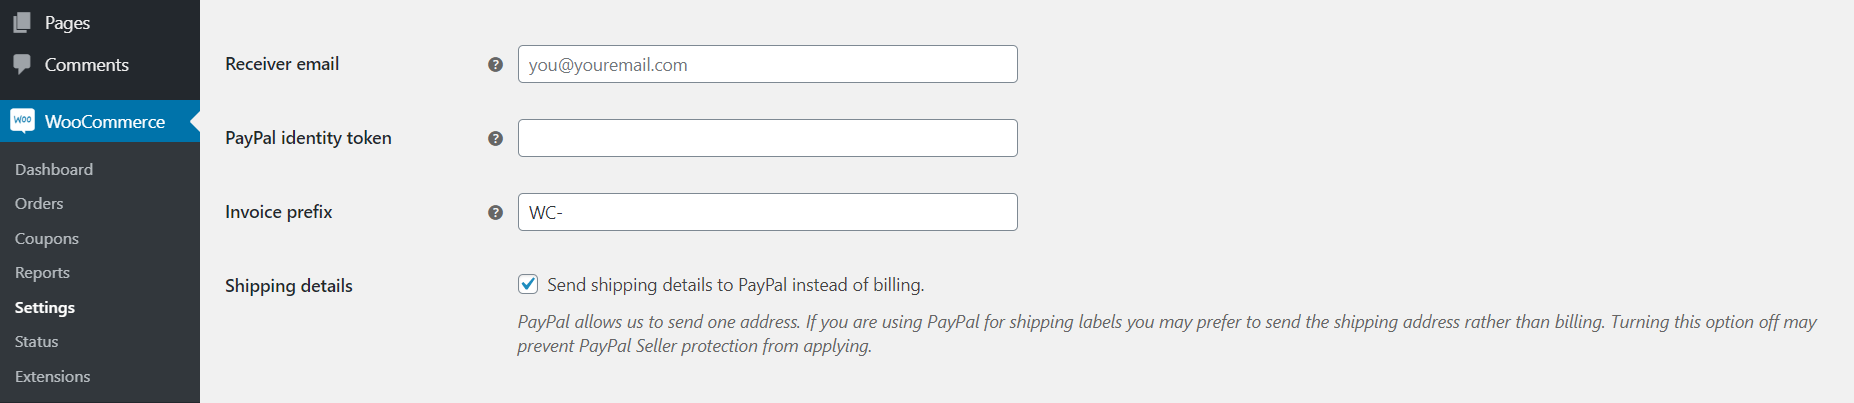 Mengkonfigurasi pengaturan PayPal Anda.